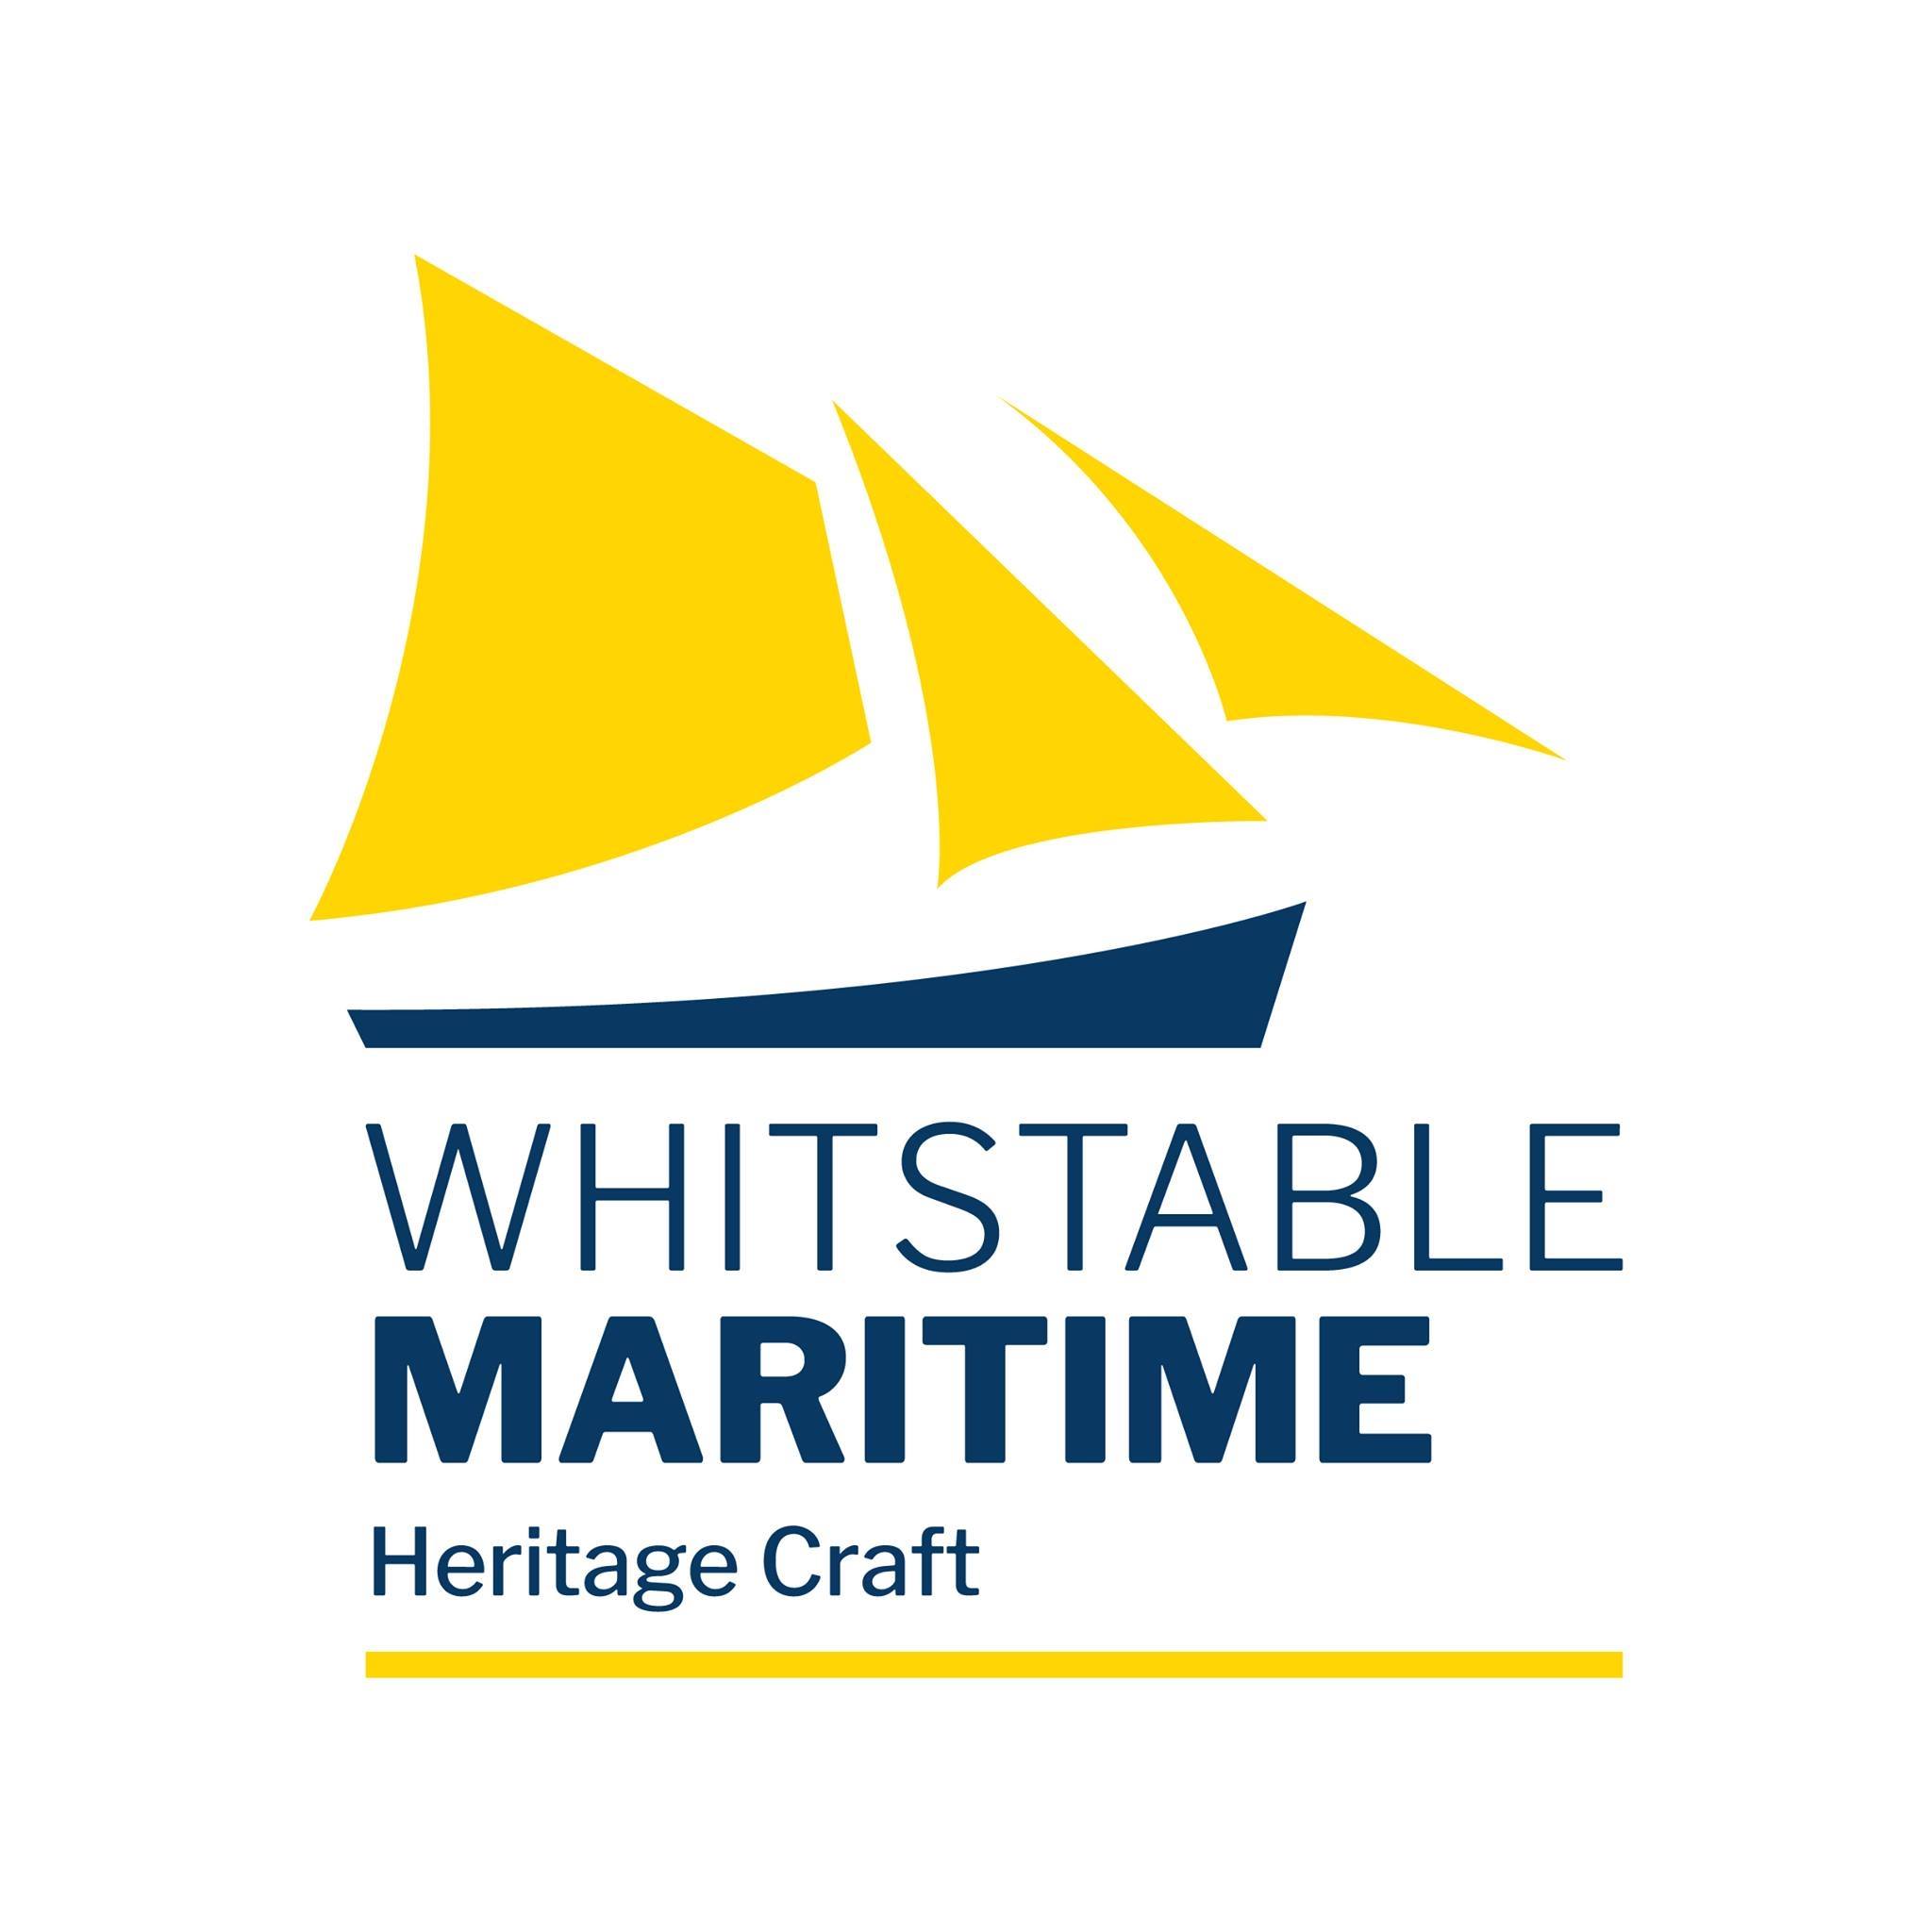 Whitstabe Maritime Heritage craft logo